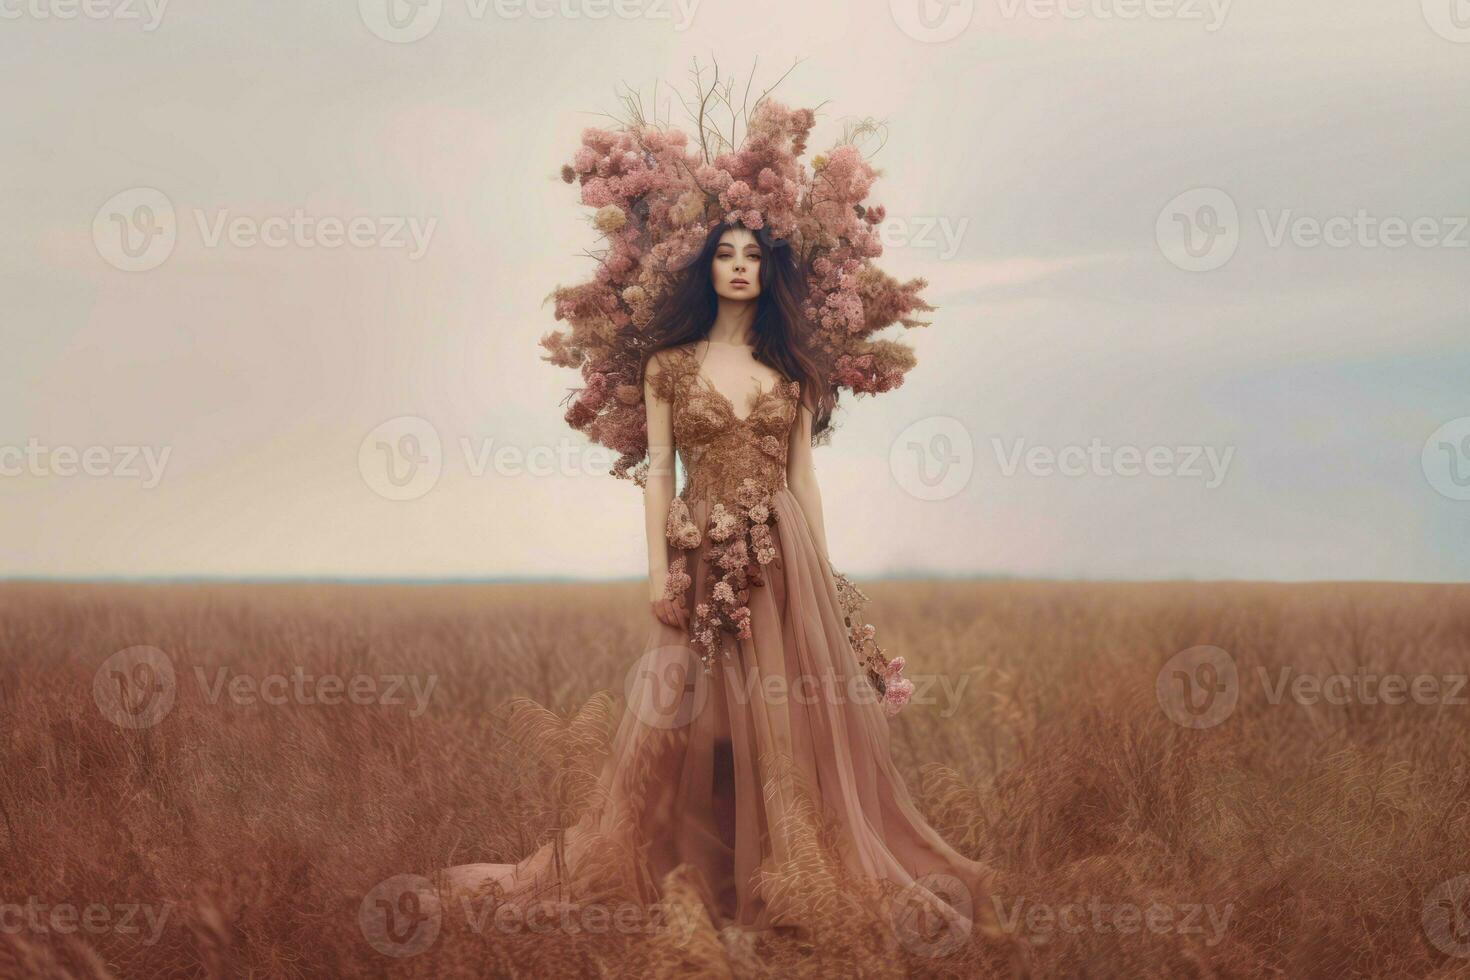 Woman flower dress. Generate AI photo